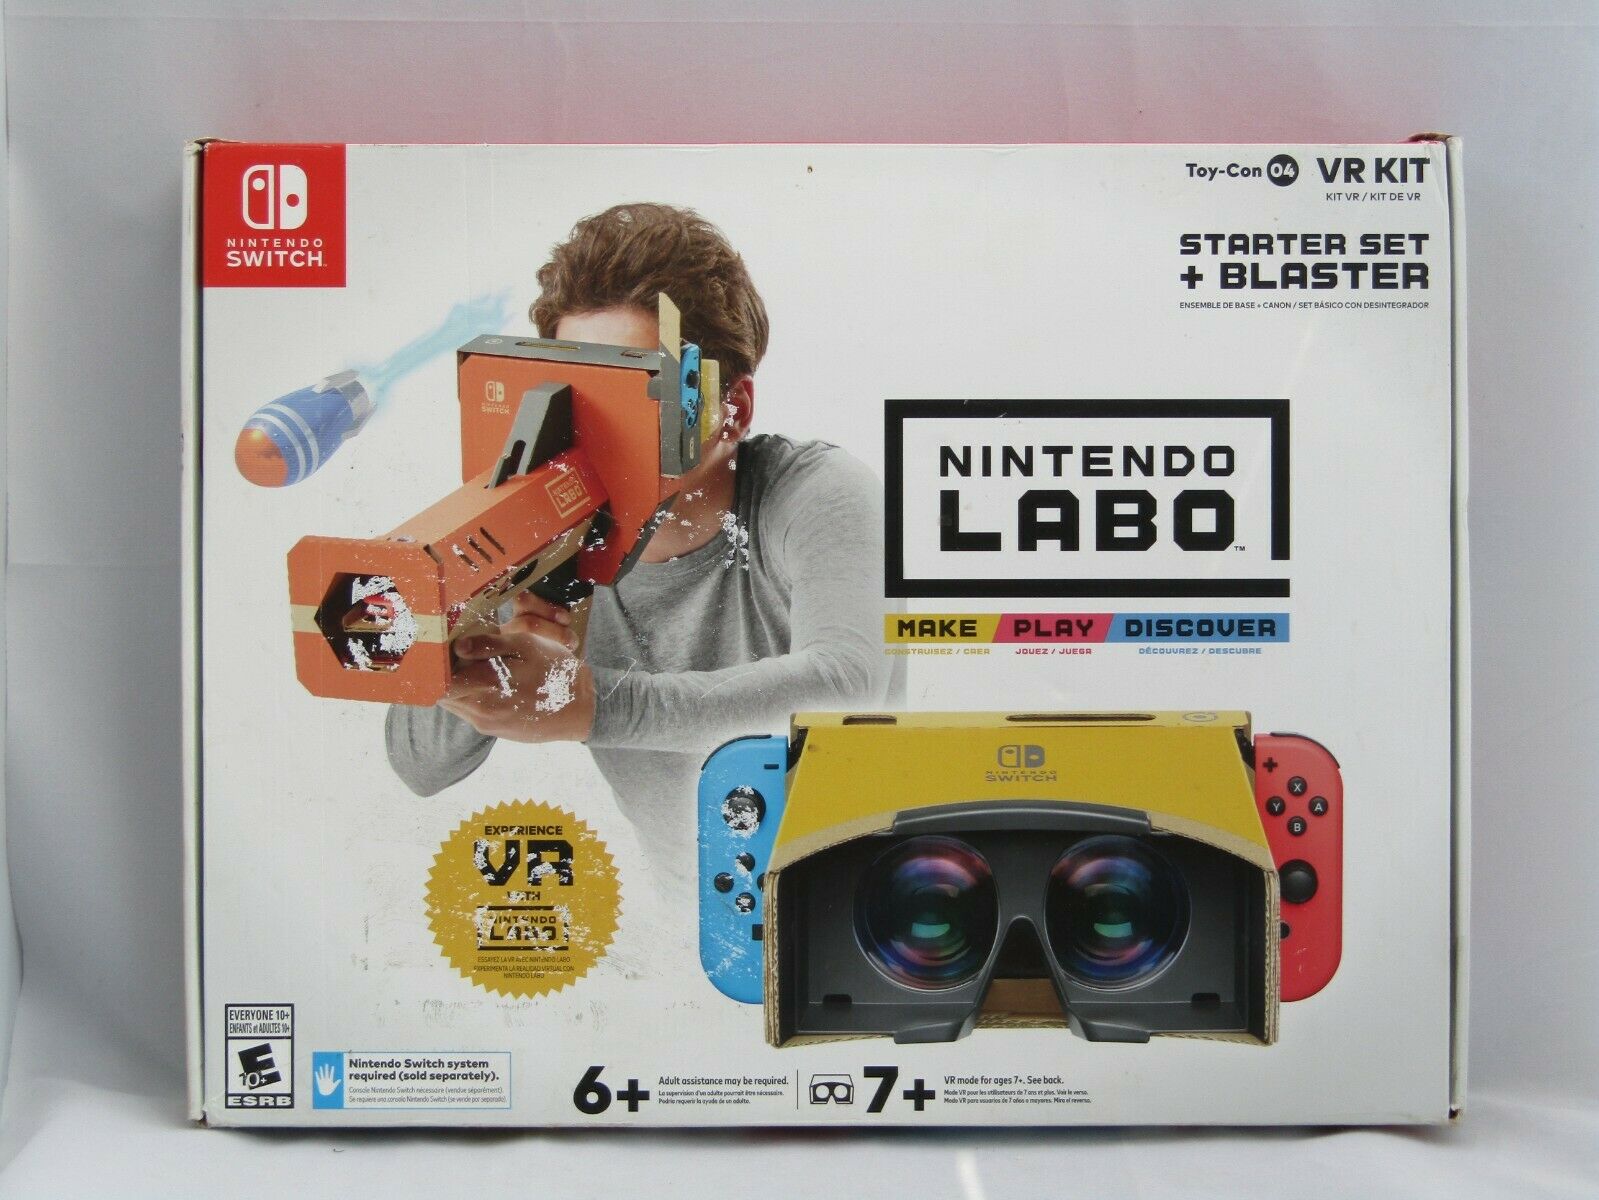 Nintendo Labo Toy-con 04: Vr Kit Starter Set + Blaster